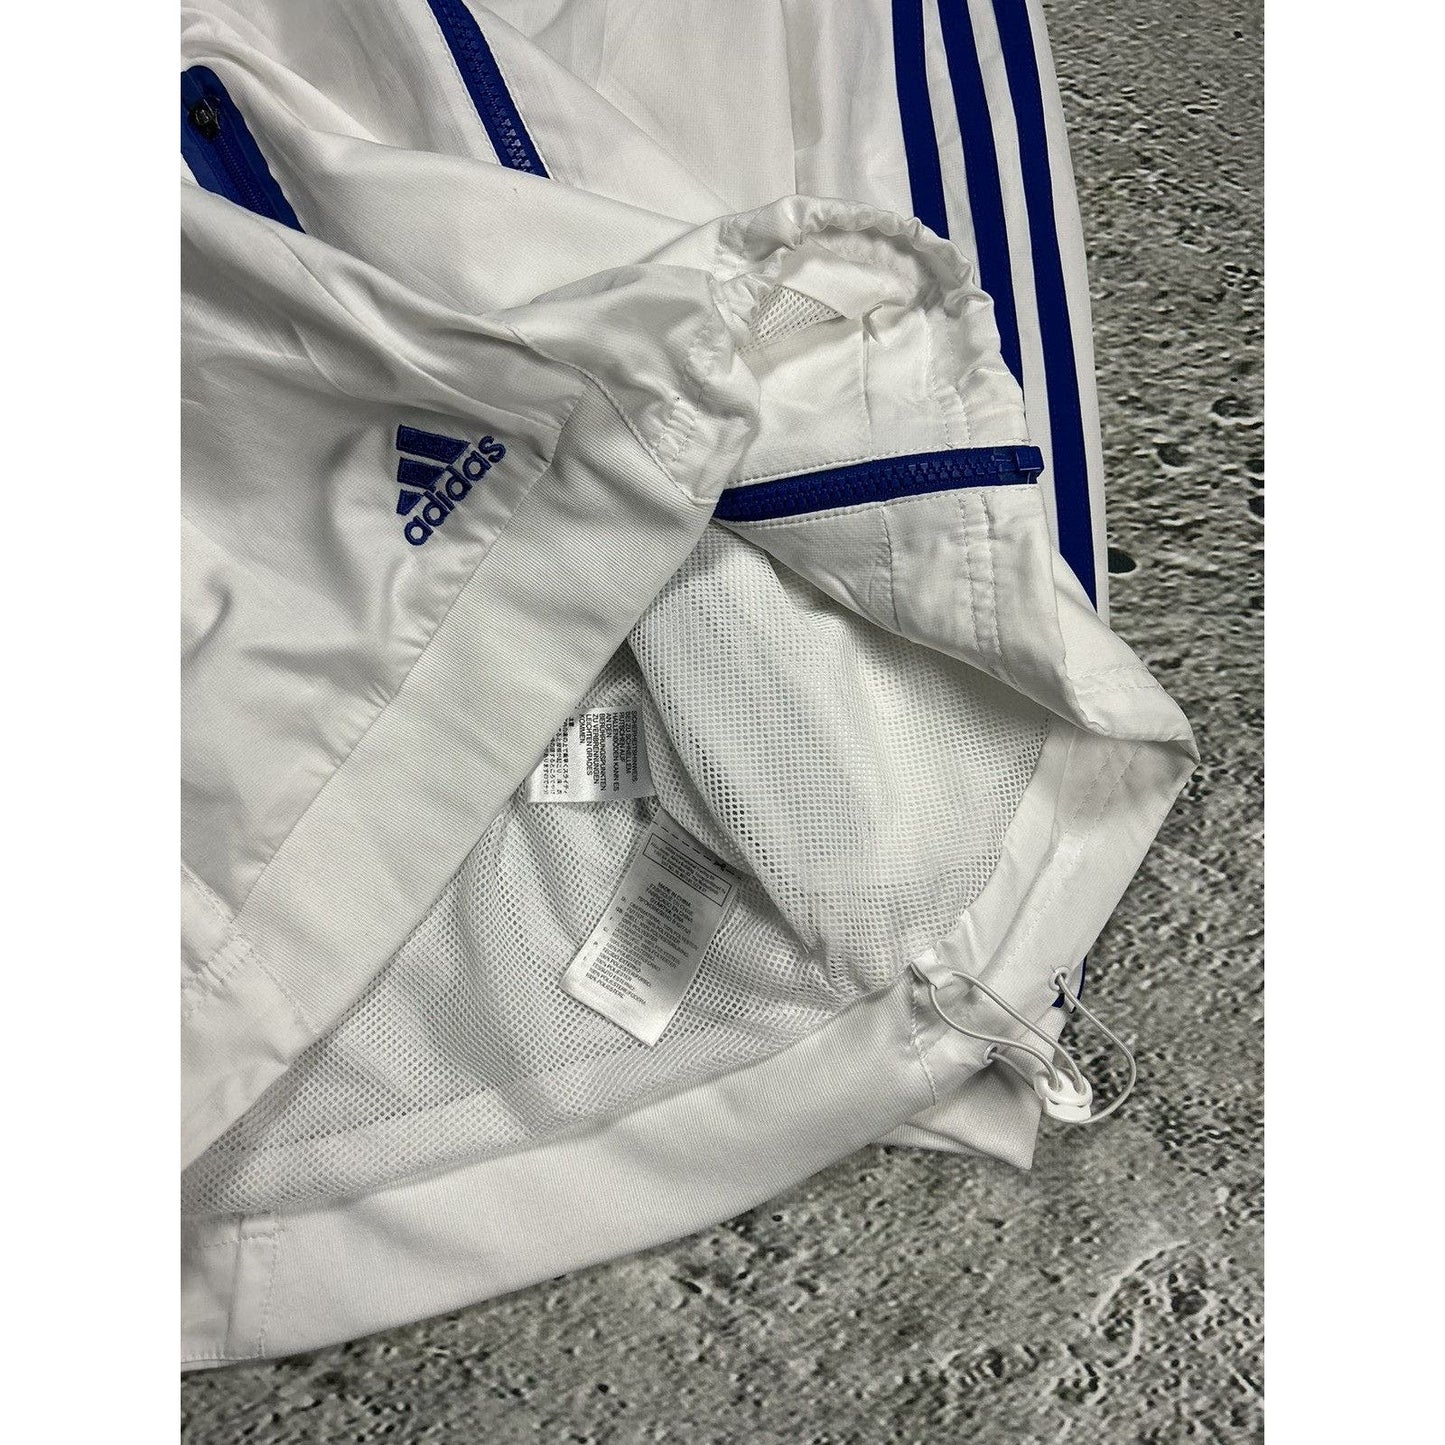 Real Madrid Adidas track suit white pants jacket Champions